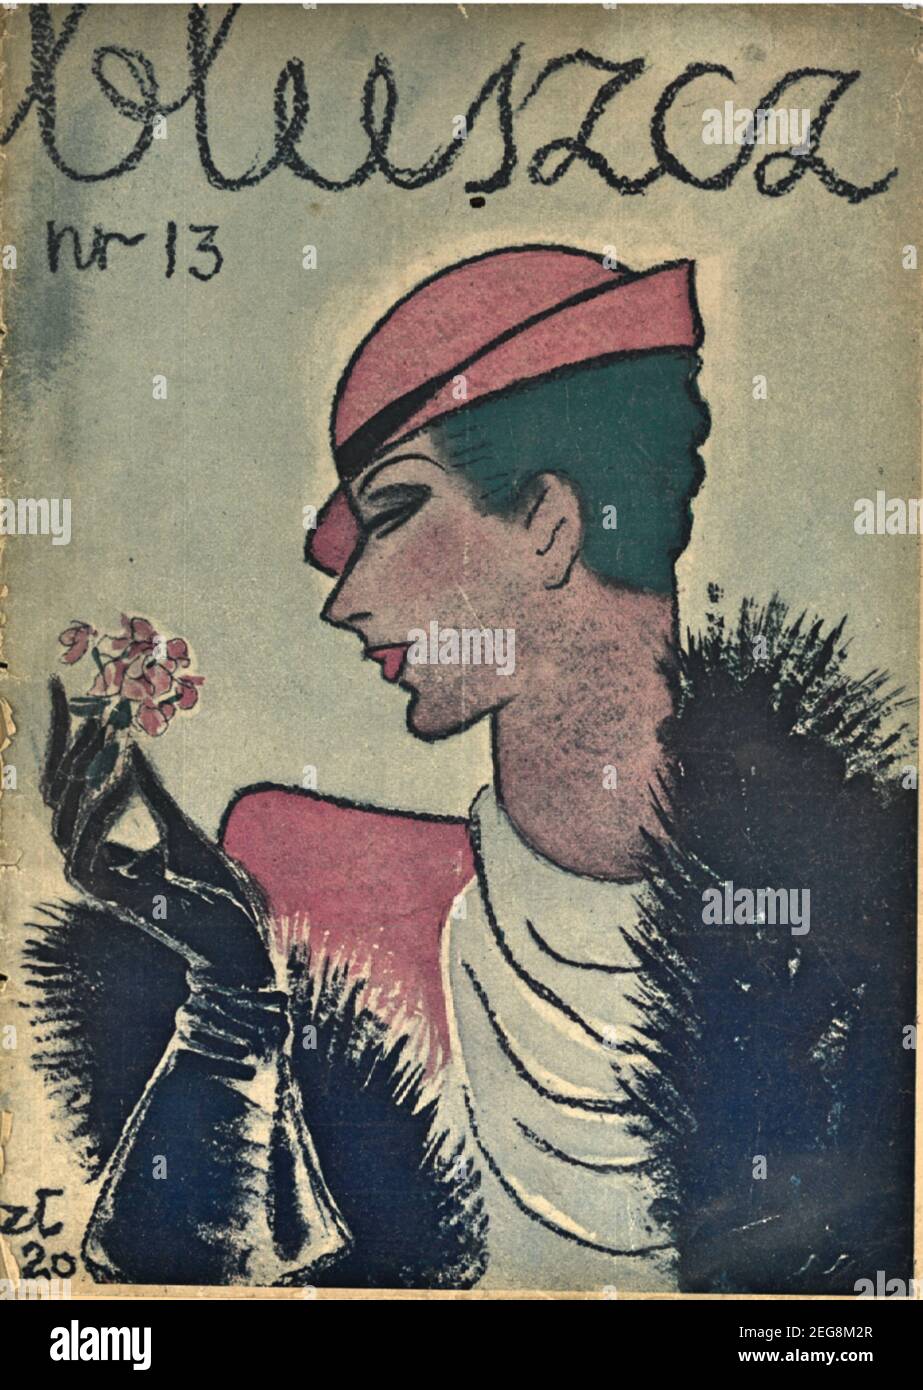 Okładka przedwojennego magazynu dla kobiet Bluszcz 1933, lata 30te, Cover der polnischen Vorkriegszeitschrift für Frauen Bluszcz Art déco-Stil Stockfoto